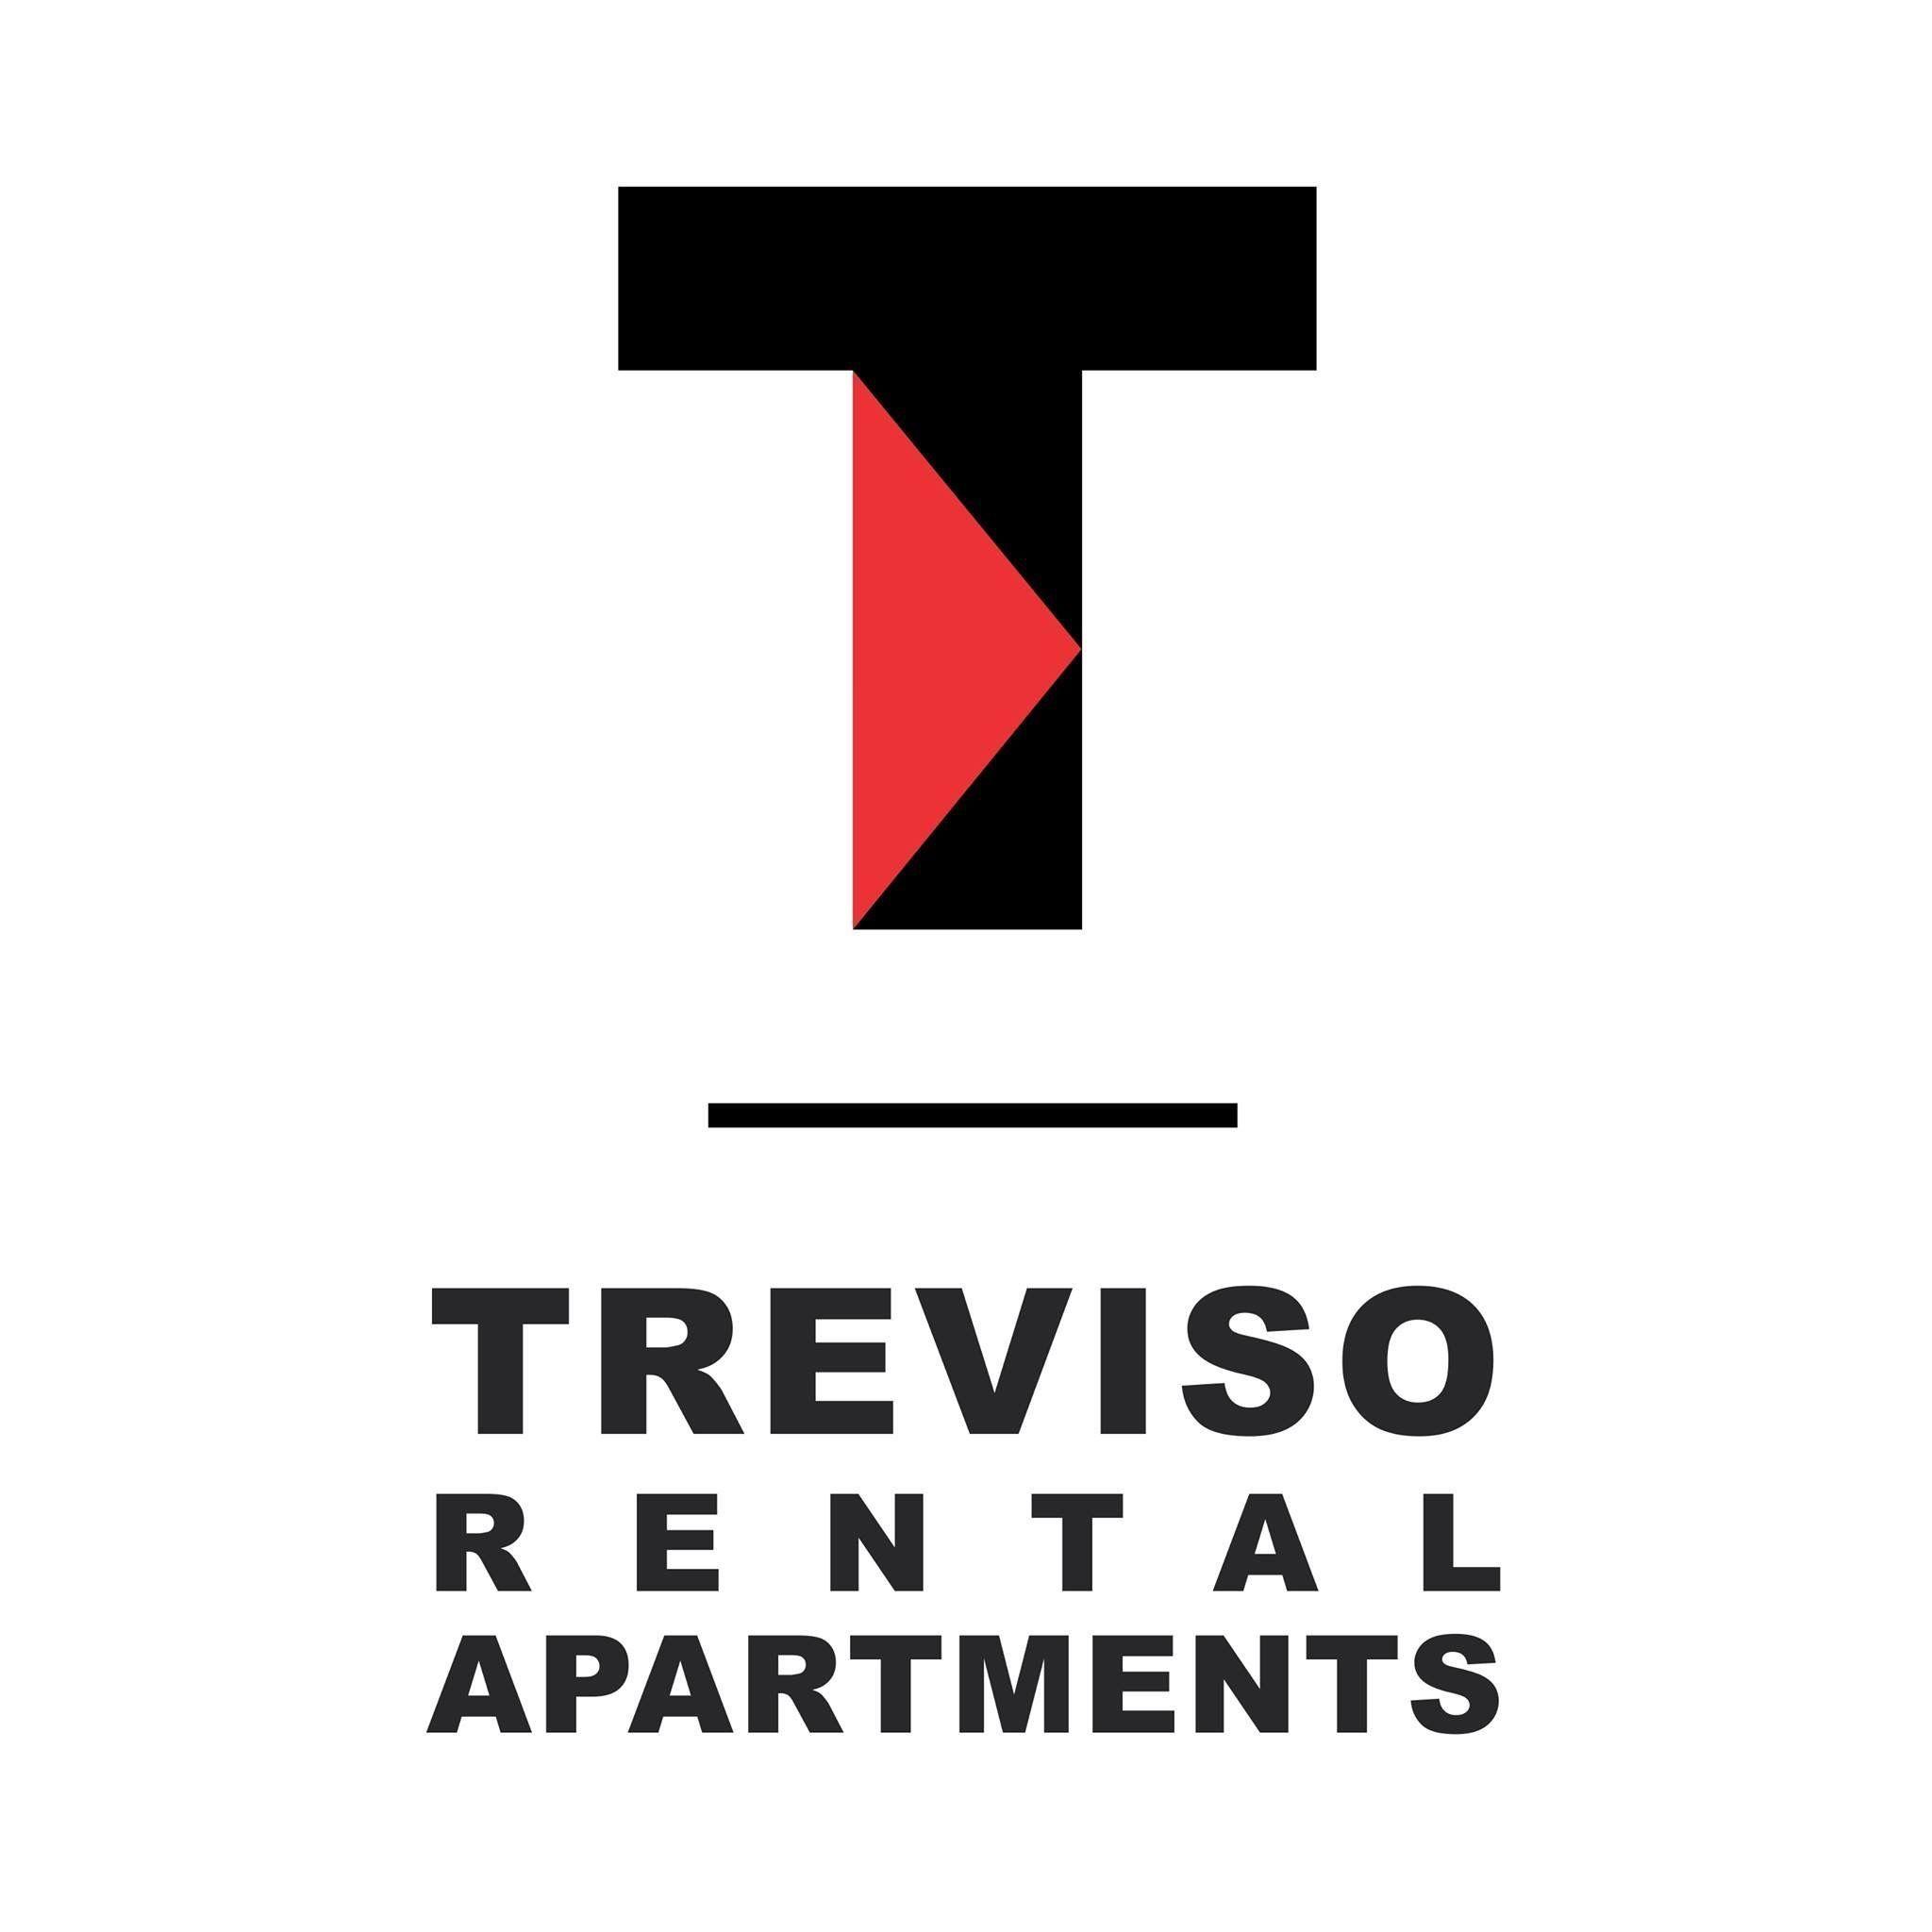 Treviso Logo - Treviso Rental Apartments Apartment Rentals, Apartment Living, Home